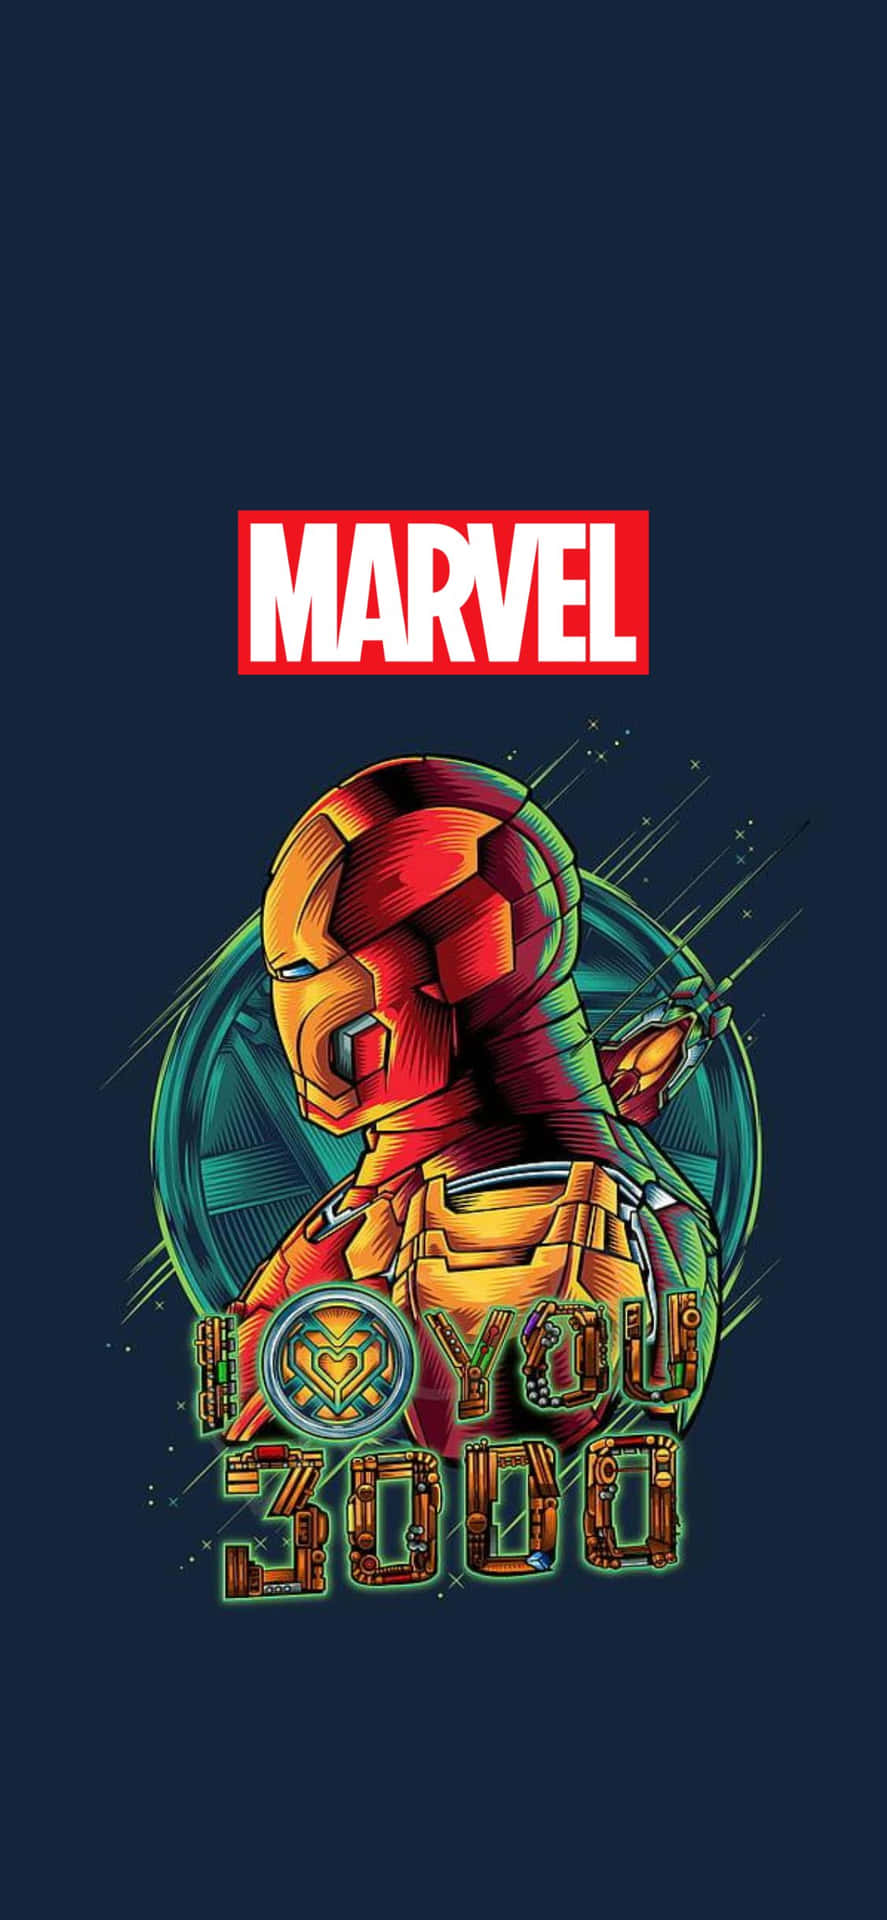 I Love You 3000 Iron Man iPhone XS Marvel Background